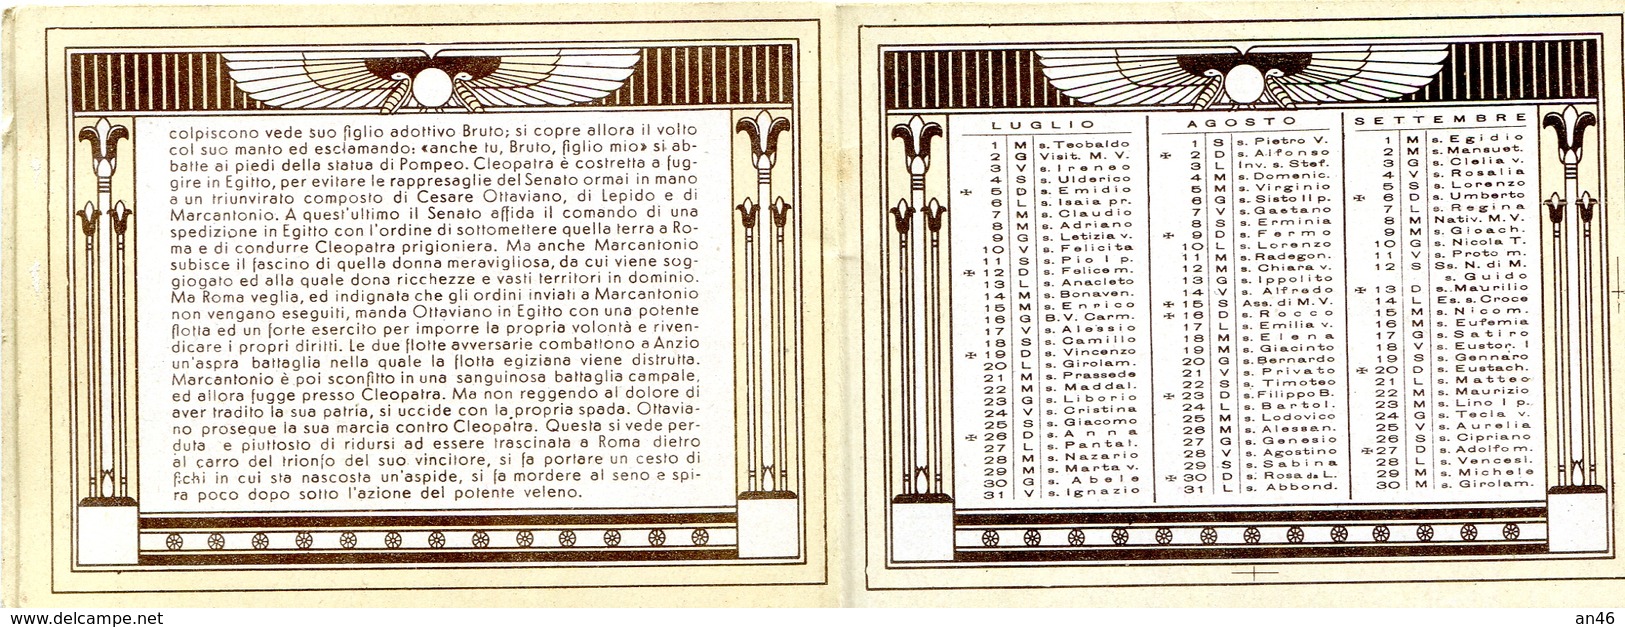 Calendario-Calendarietto-Calendrier-Kalender-Calendar-1936 "CLEOPATRA"Completo- Integro e Originale 100%